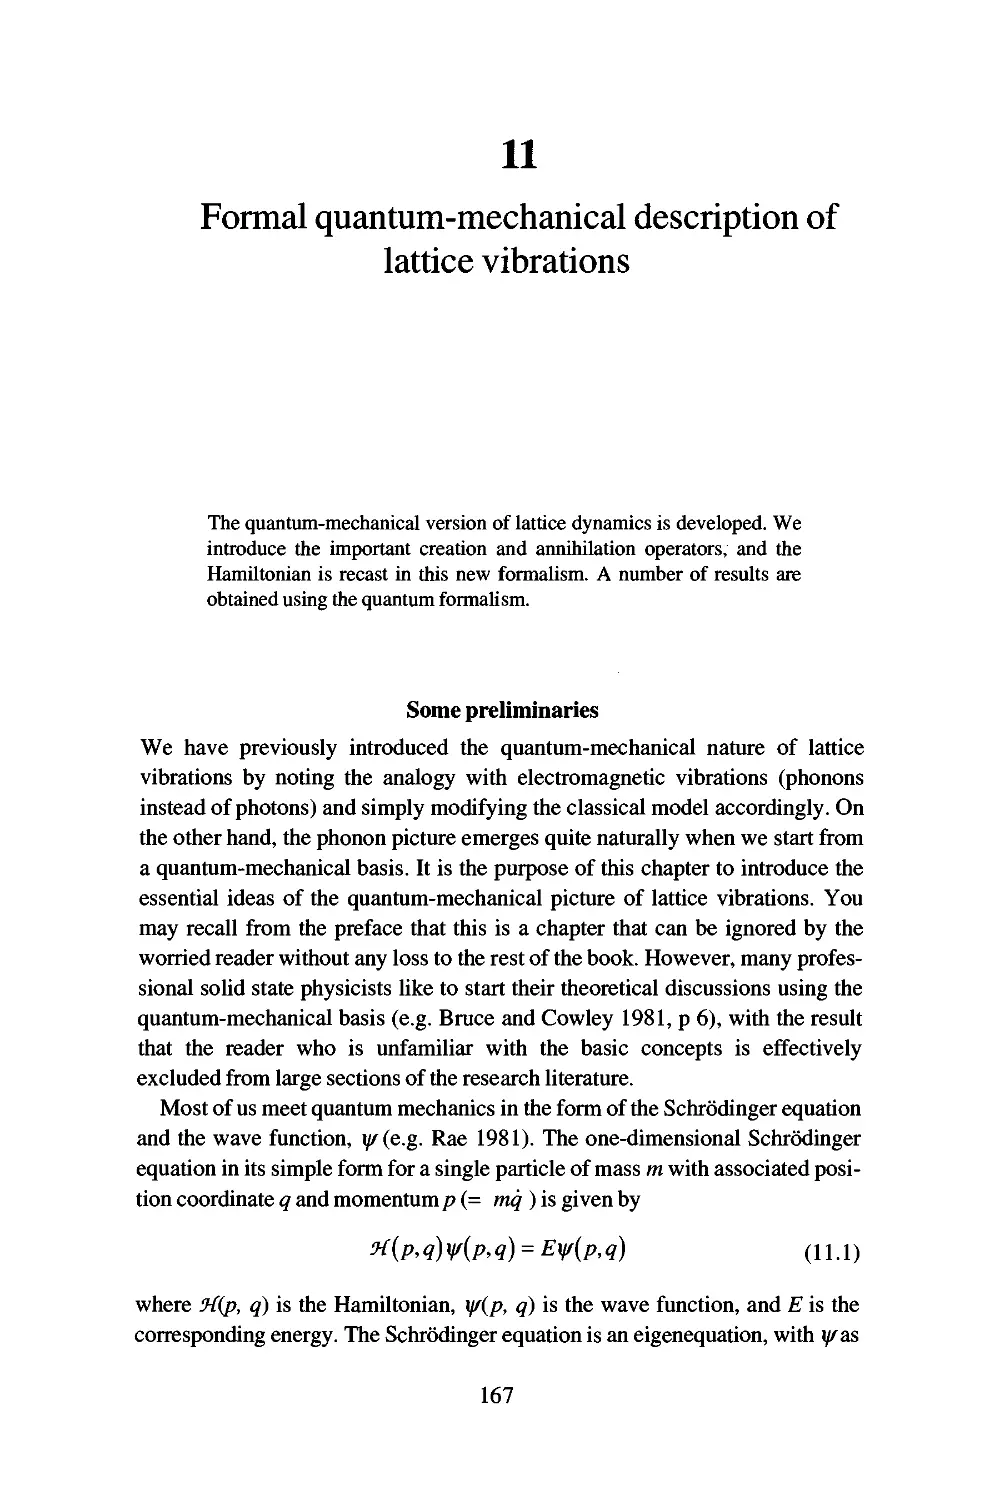 Formal quantum-mechanical description of lattice vibrations